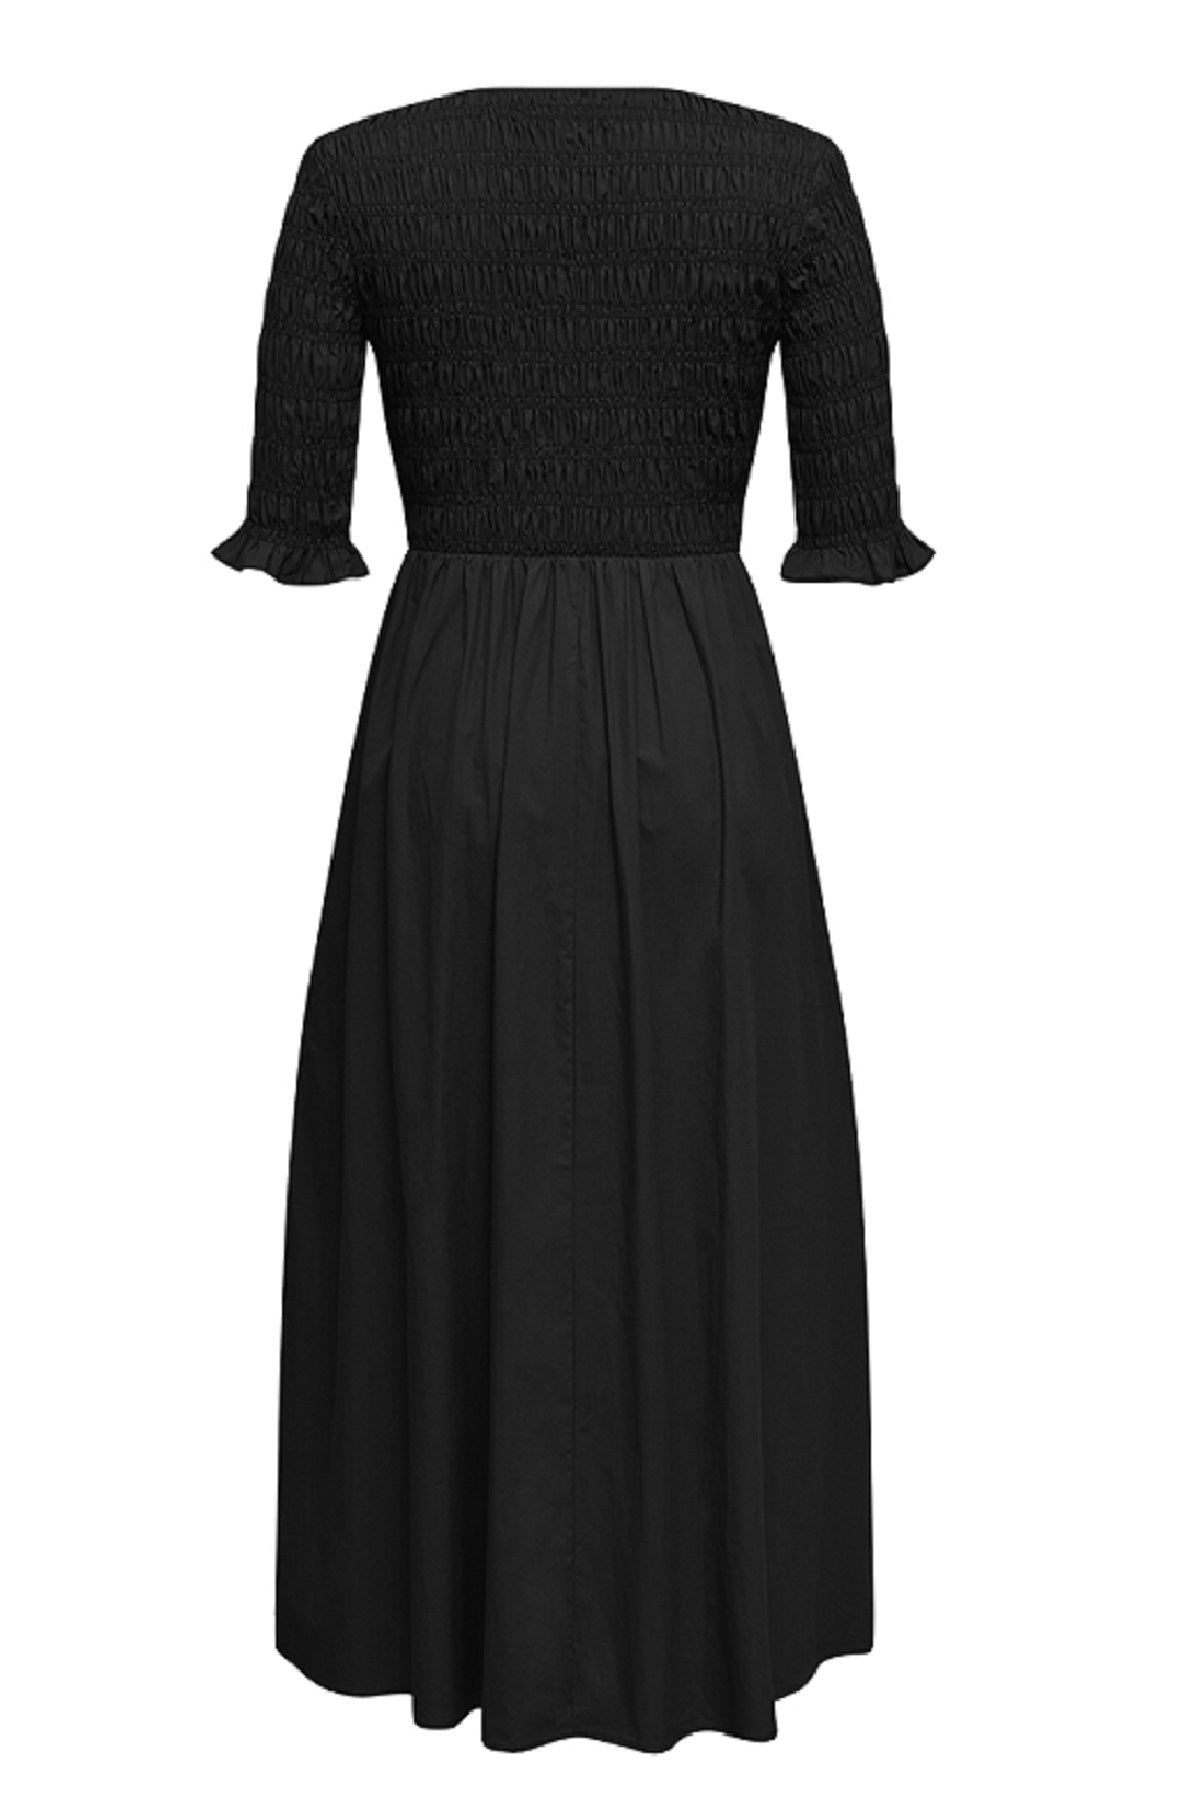 Gossia AinaGO Dress, Black